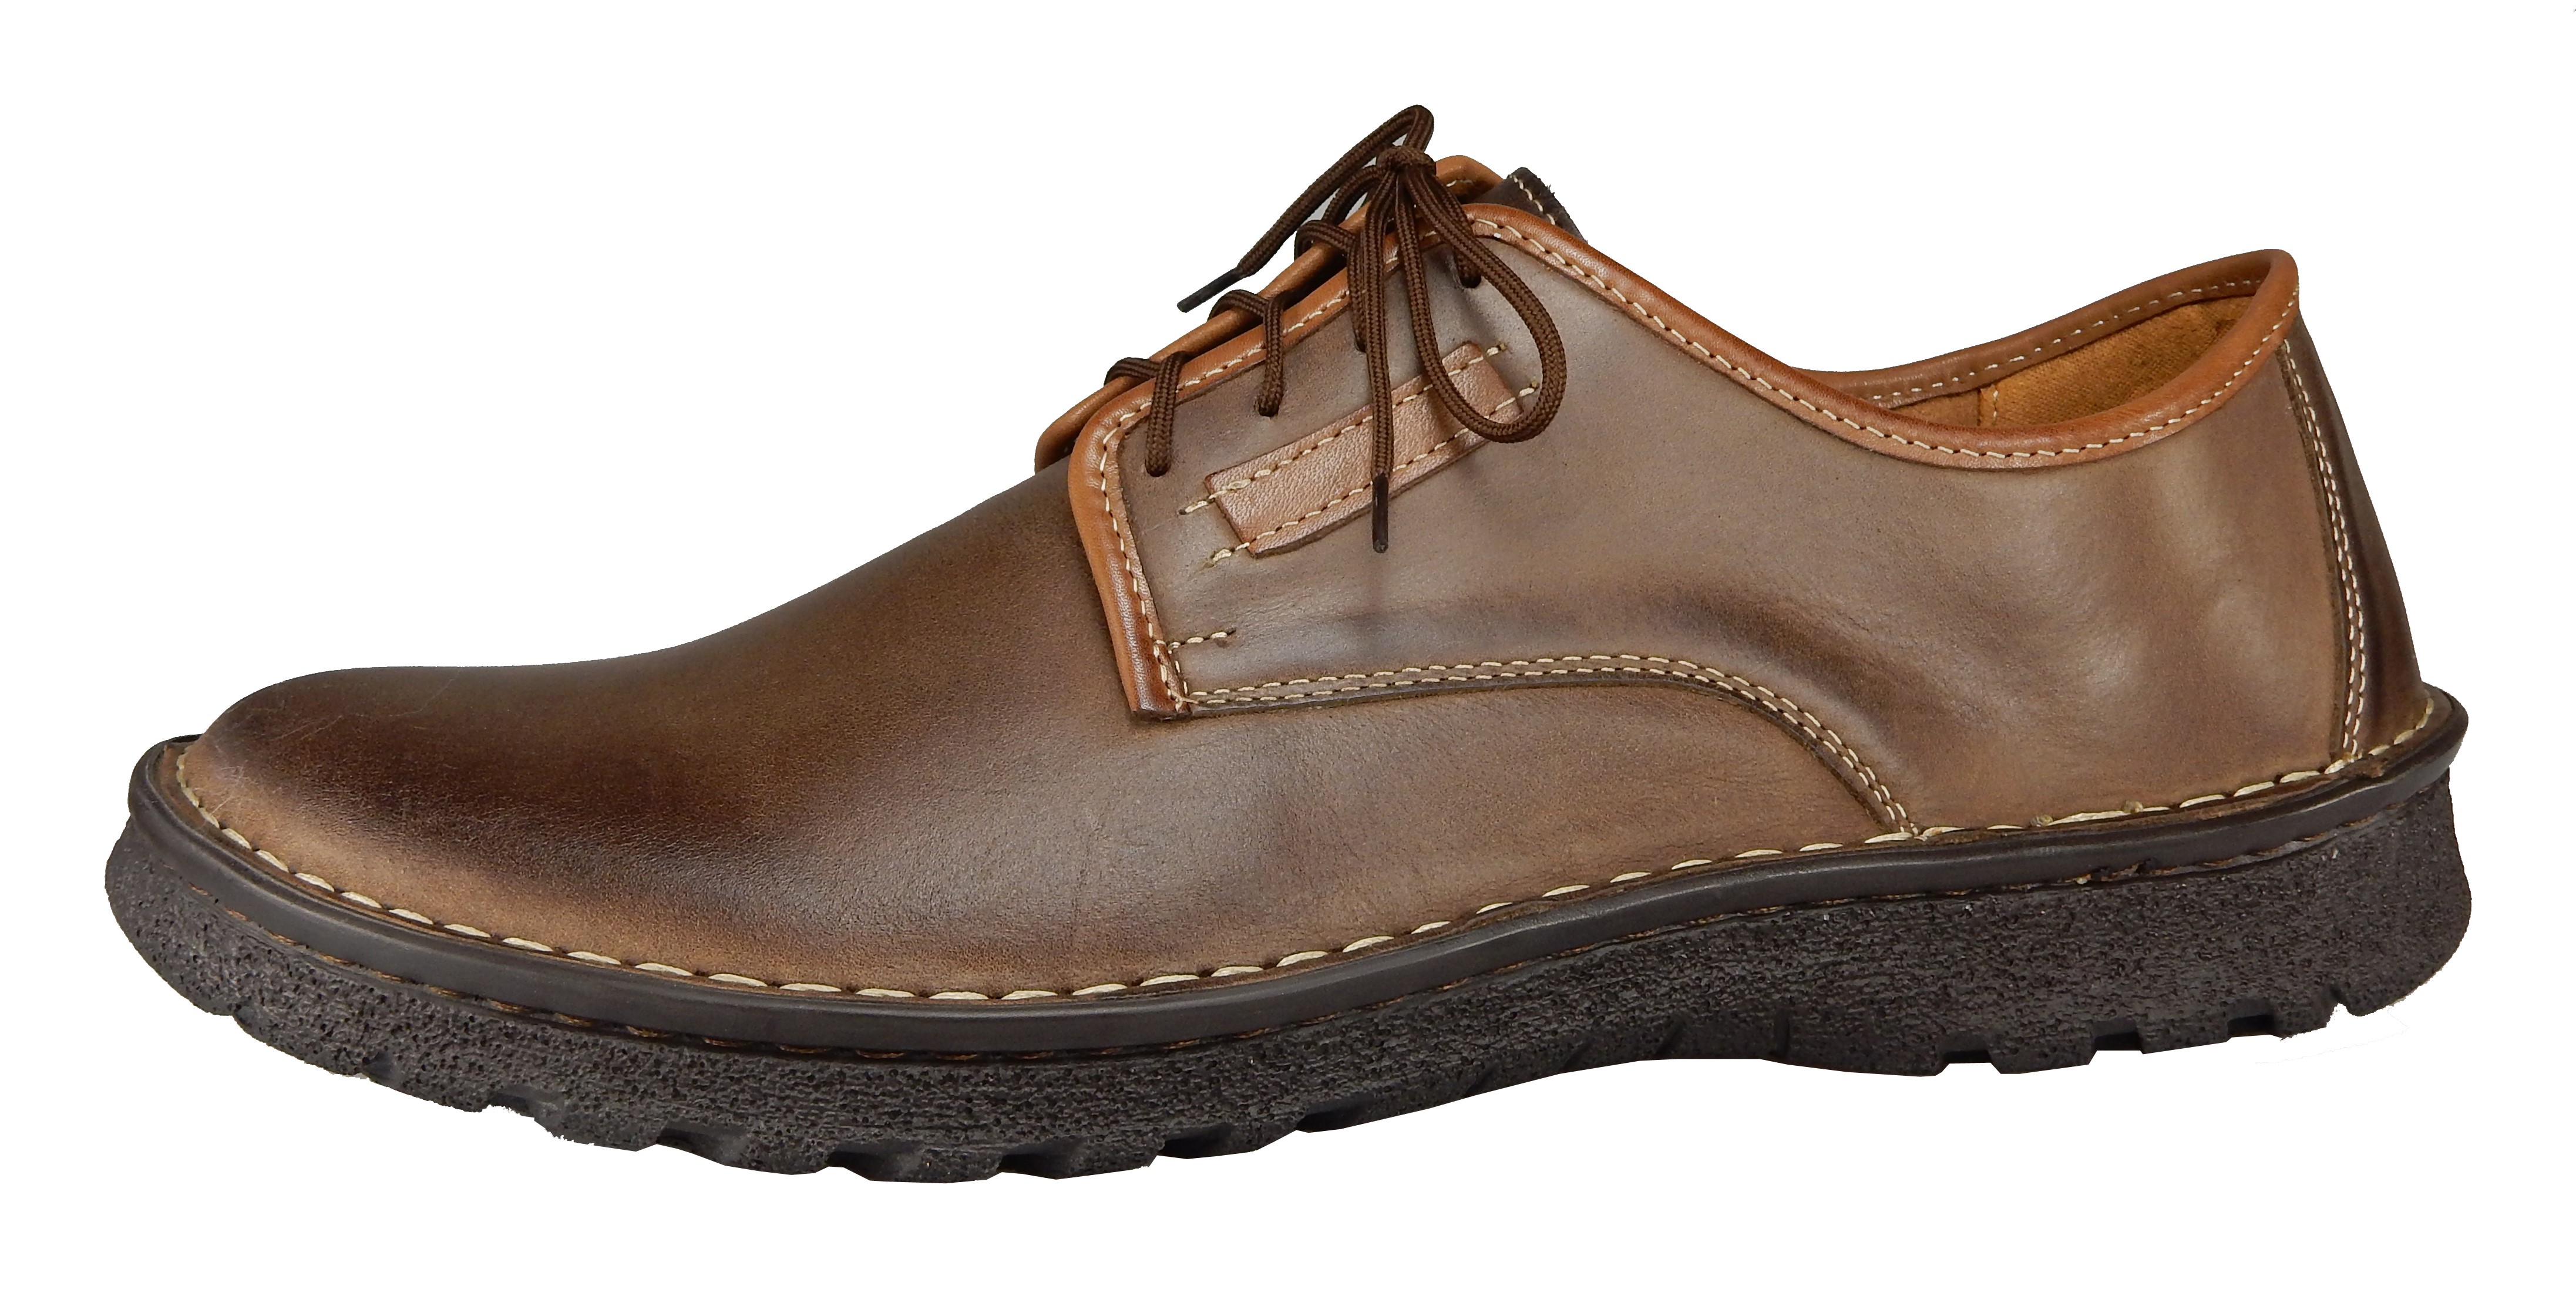 * Pánské hnědé kožené, zdravotně tvarované široké boty ORTO PLUS D00400 - 11 Tabulka pánských velikostí: 44